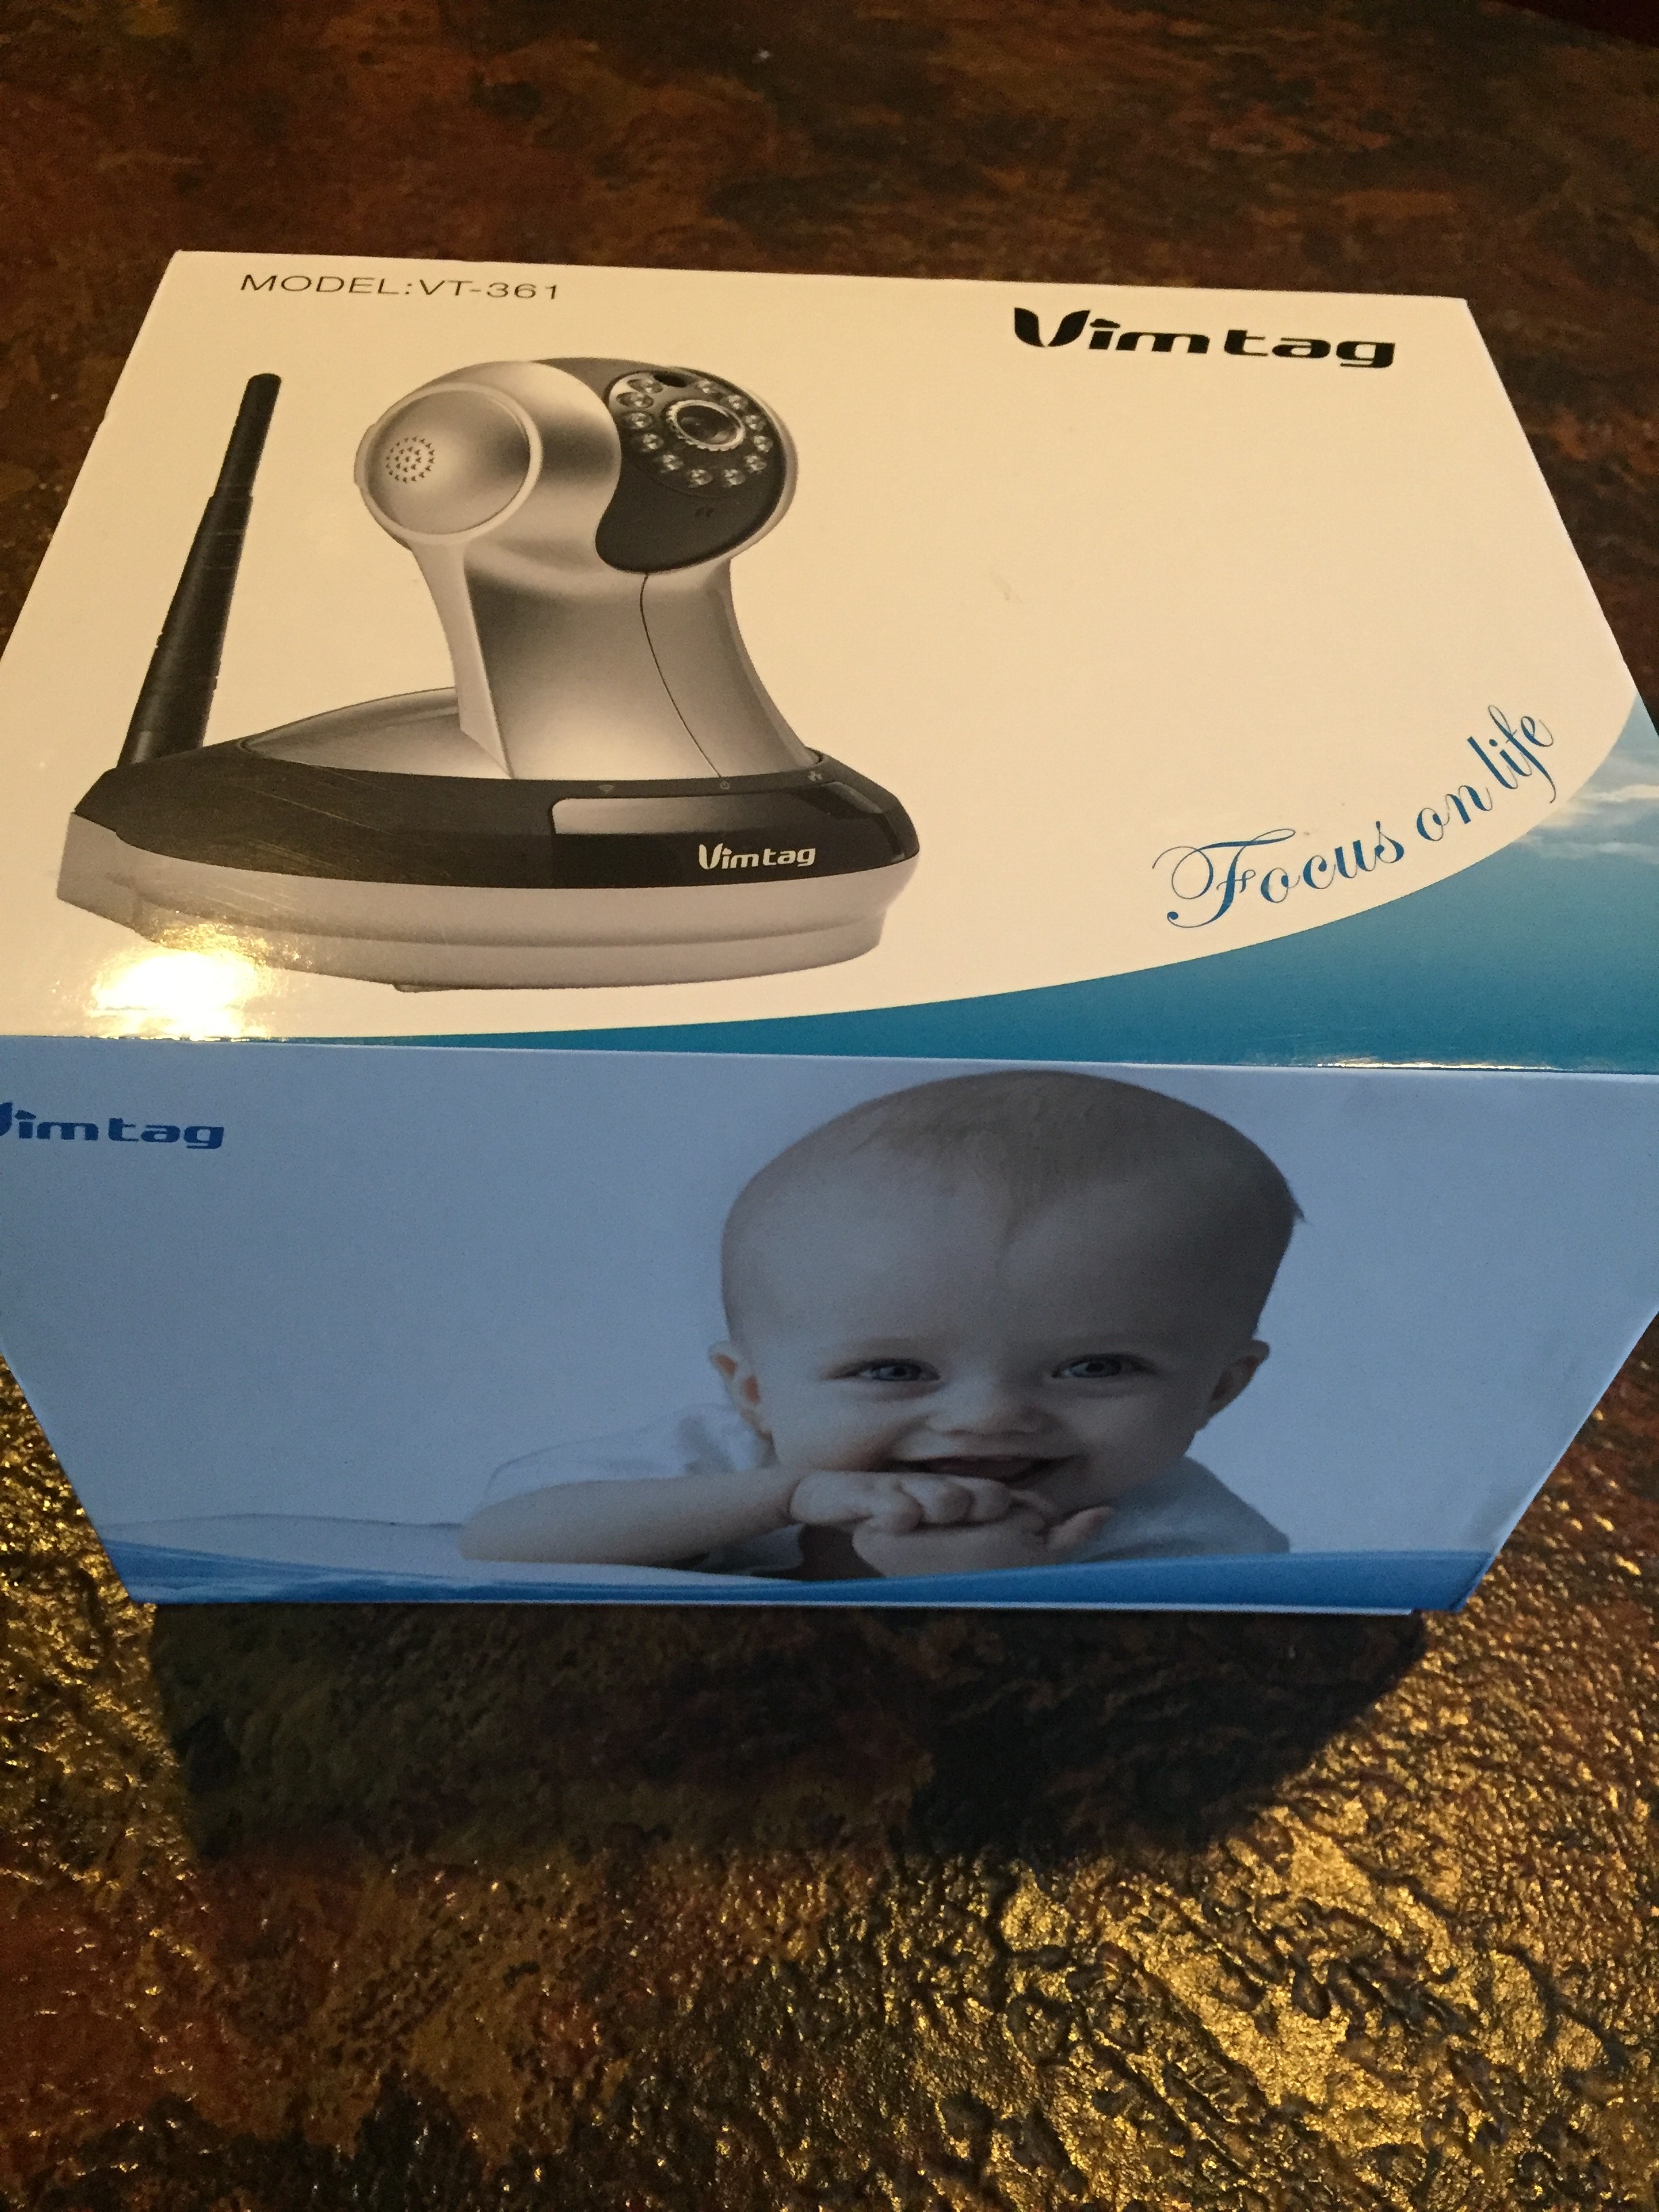 Vimtag camera in the box